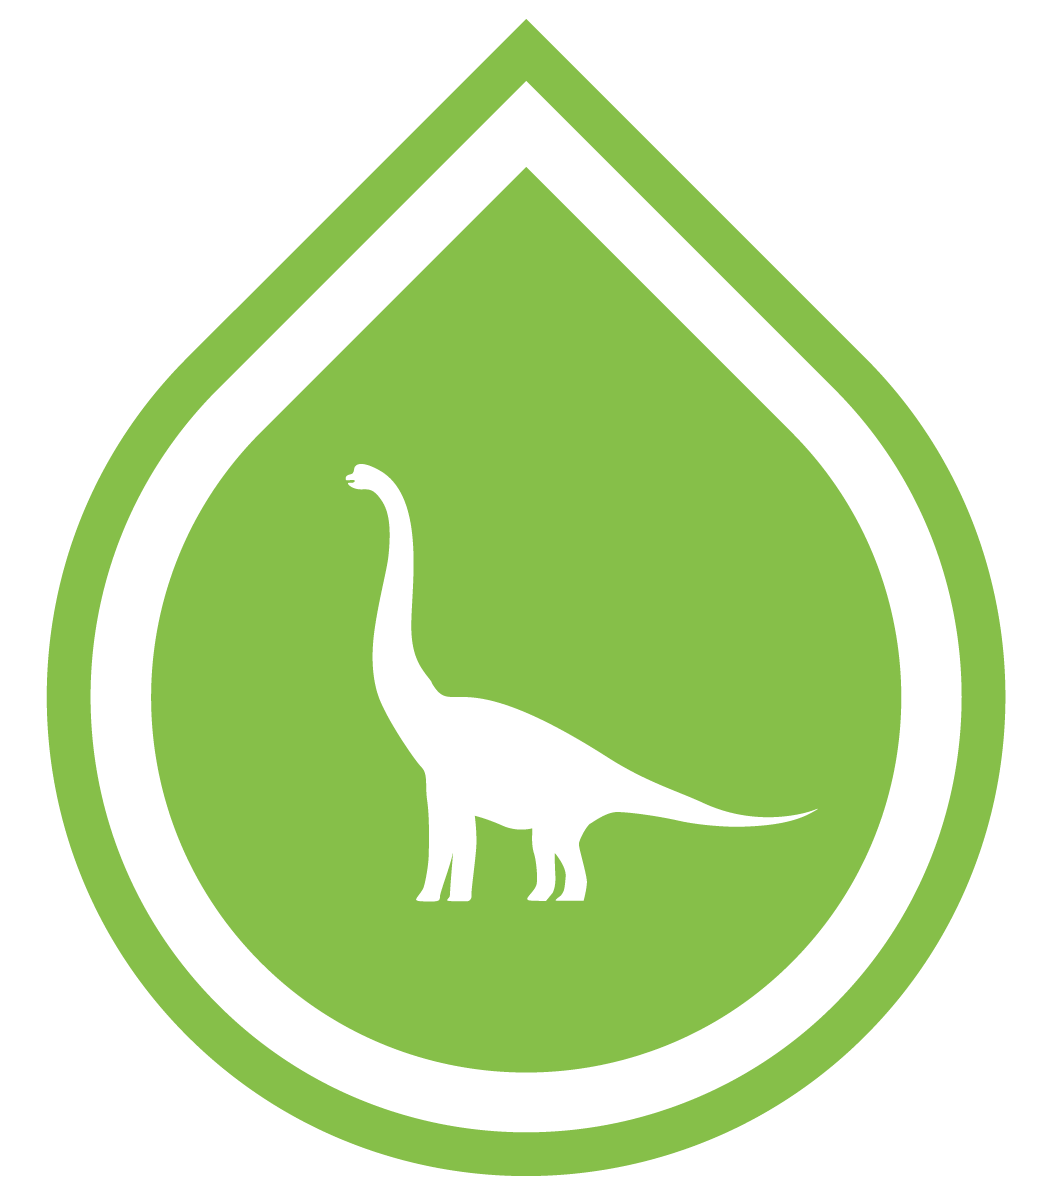 Logo for Green Dinosaur showing shadow of dinosaur in green raindrop